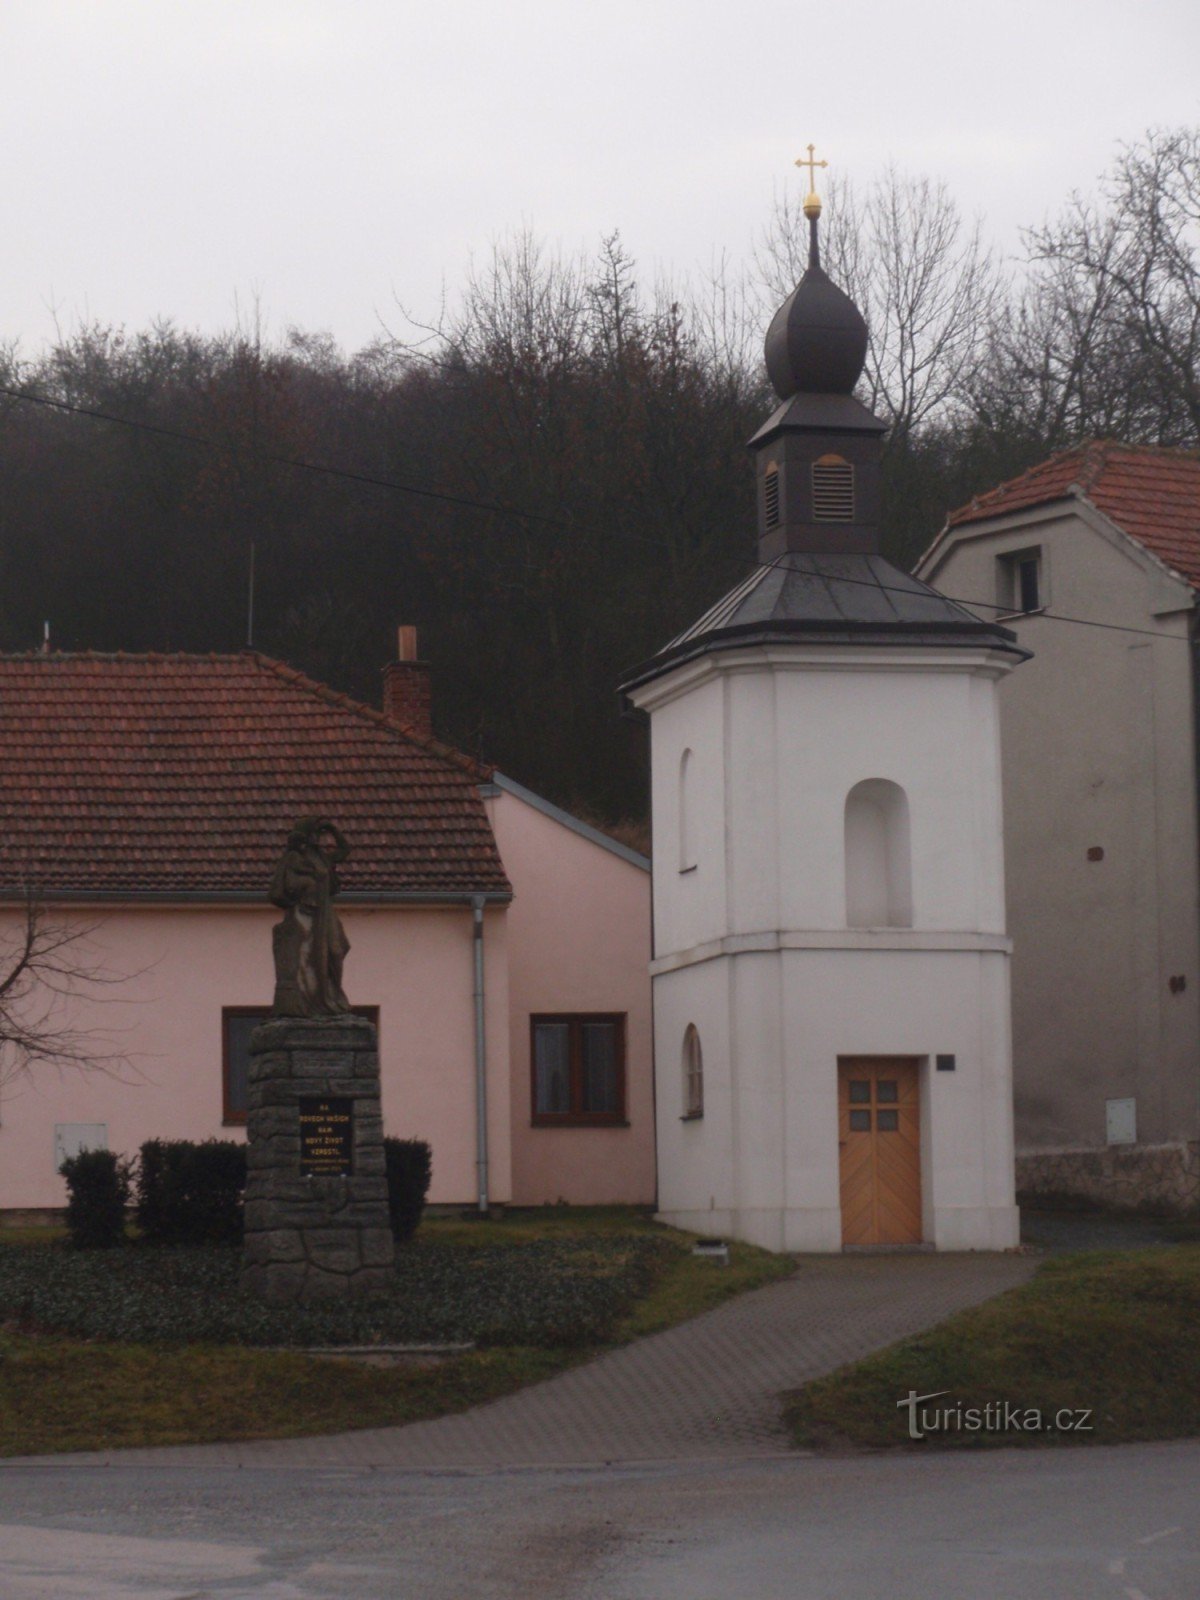 Monumenter af landsbyen Neslovice